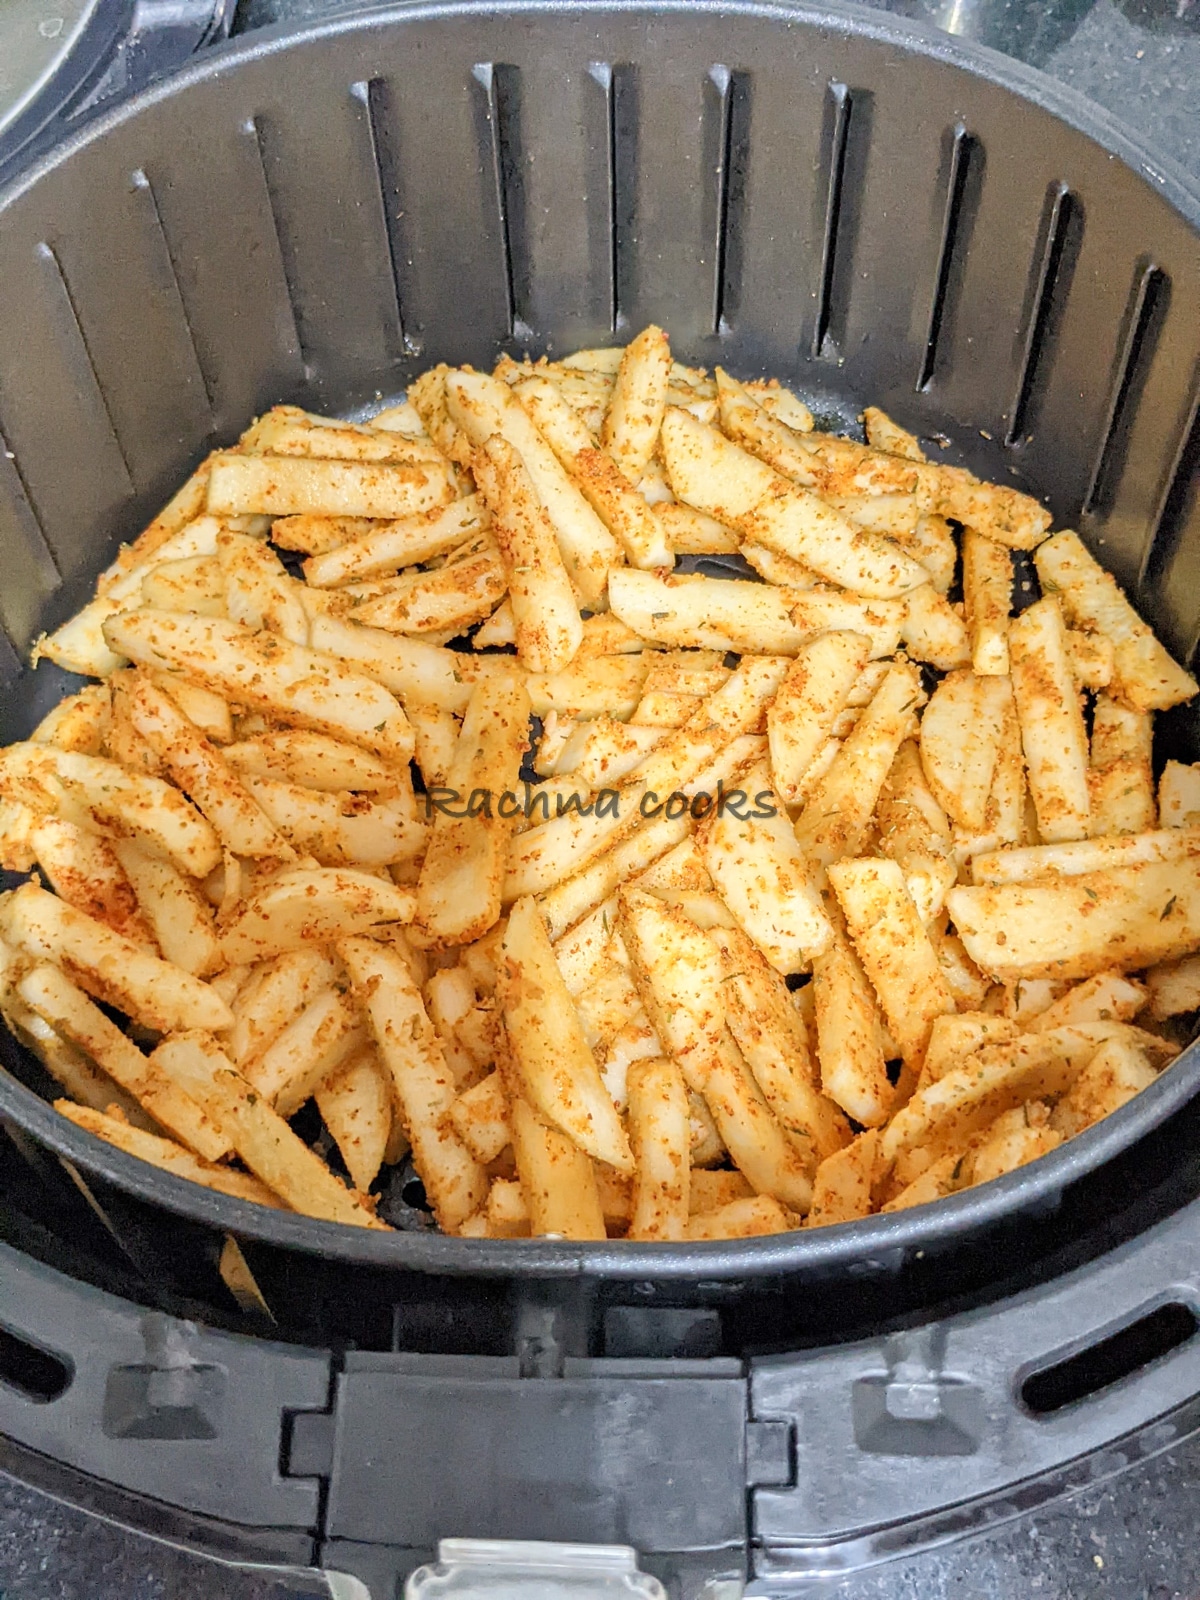 Seasoned turnip fries in an air fryer basket ready for air frying.